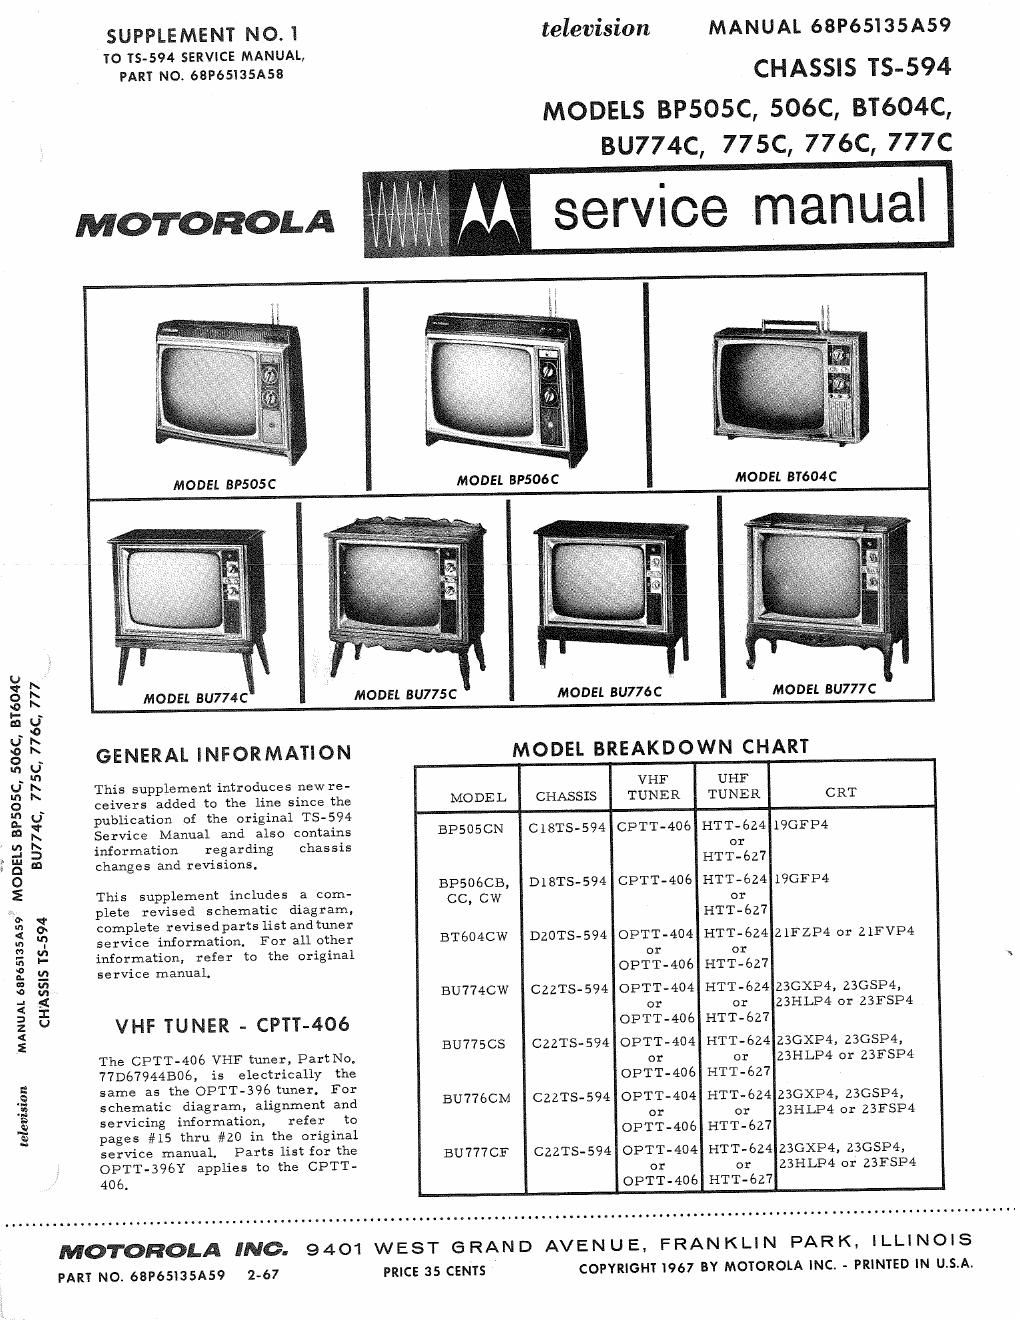 motorola bt 604 c service manual